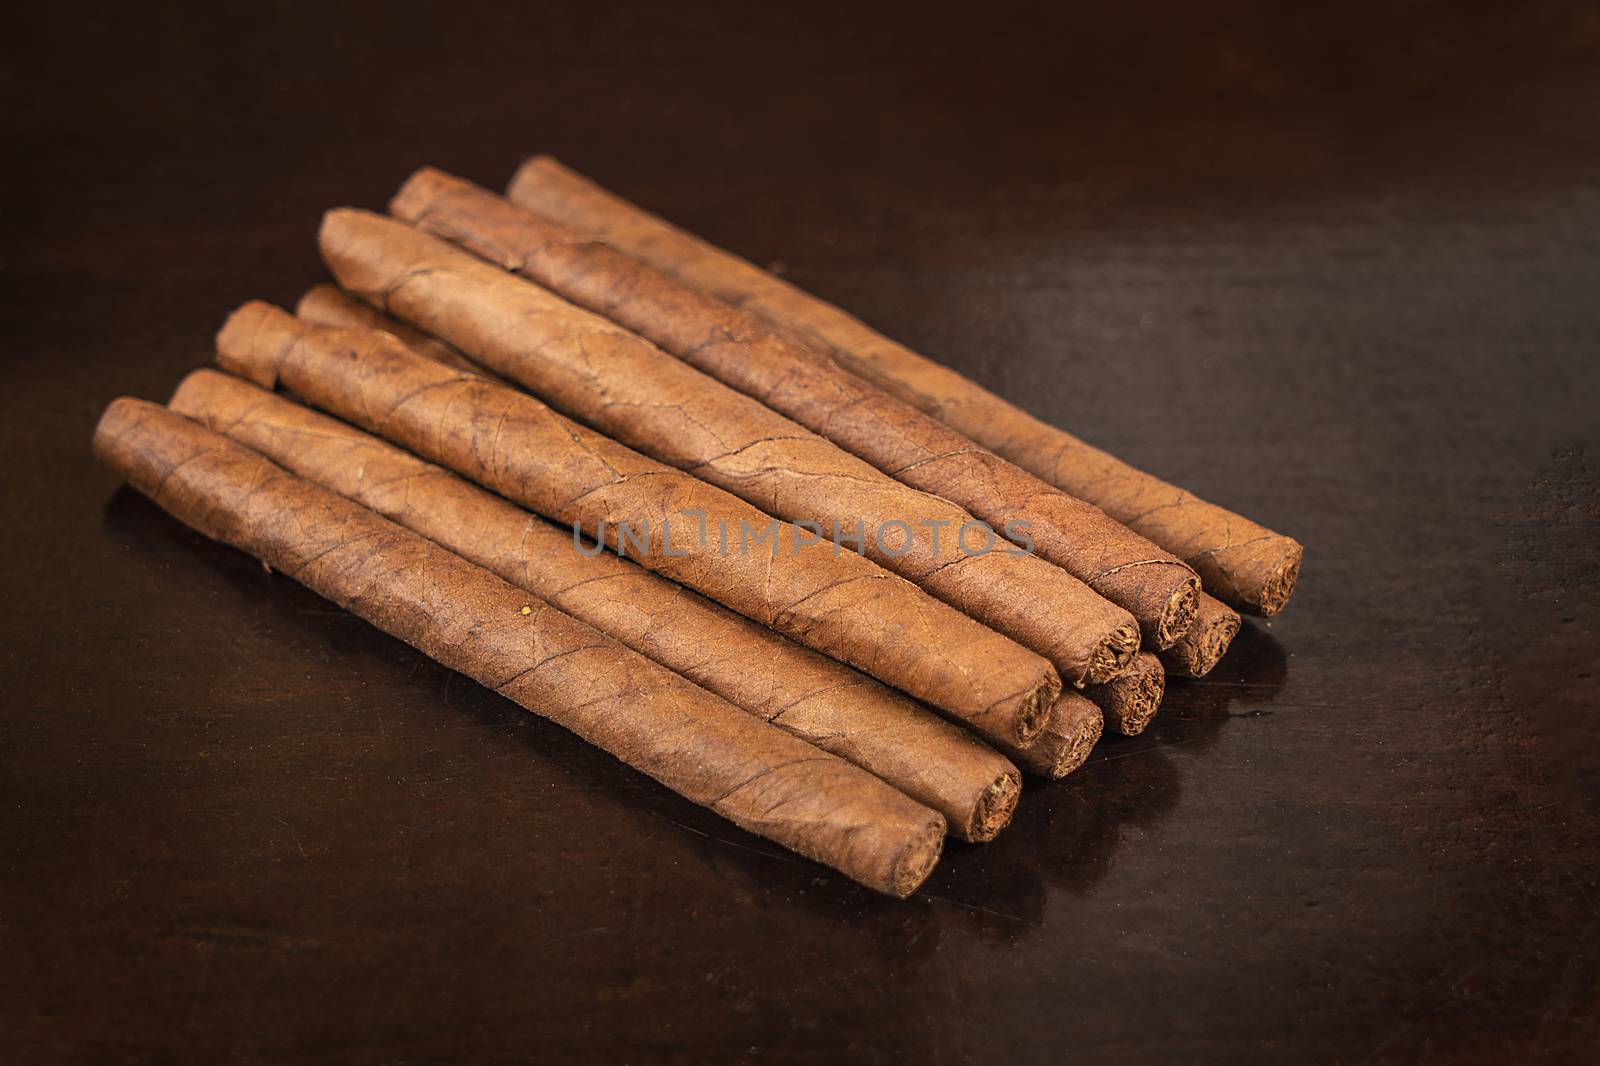 Small cigars by jrivalta